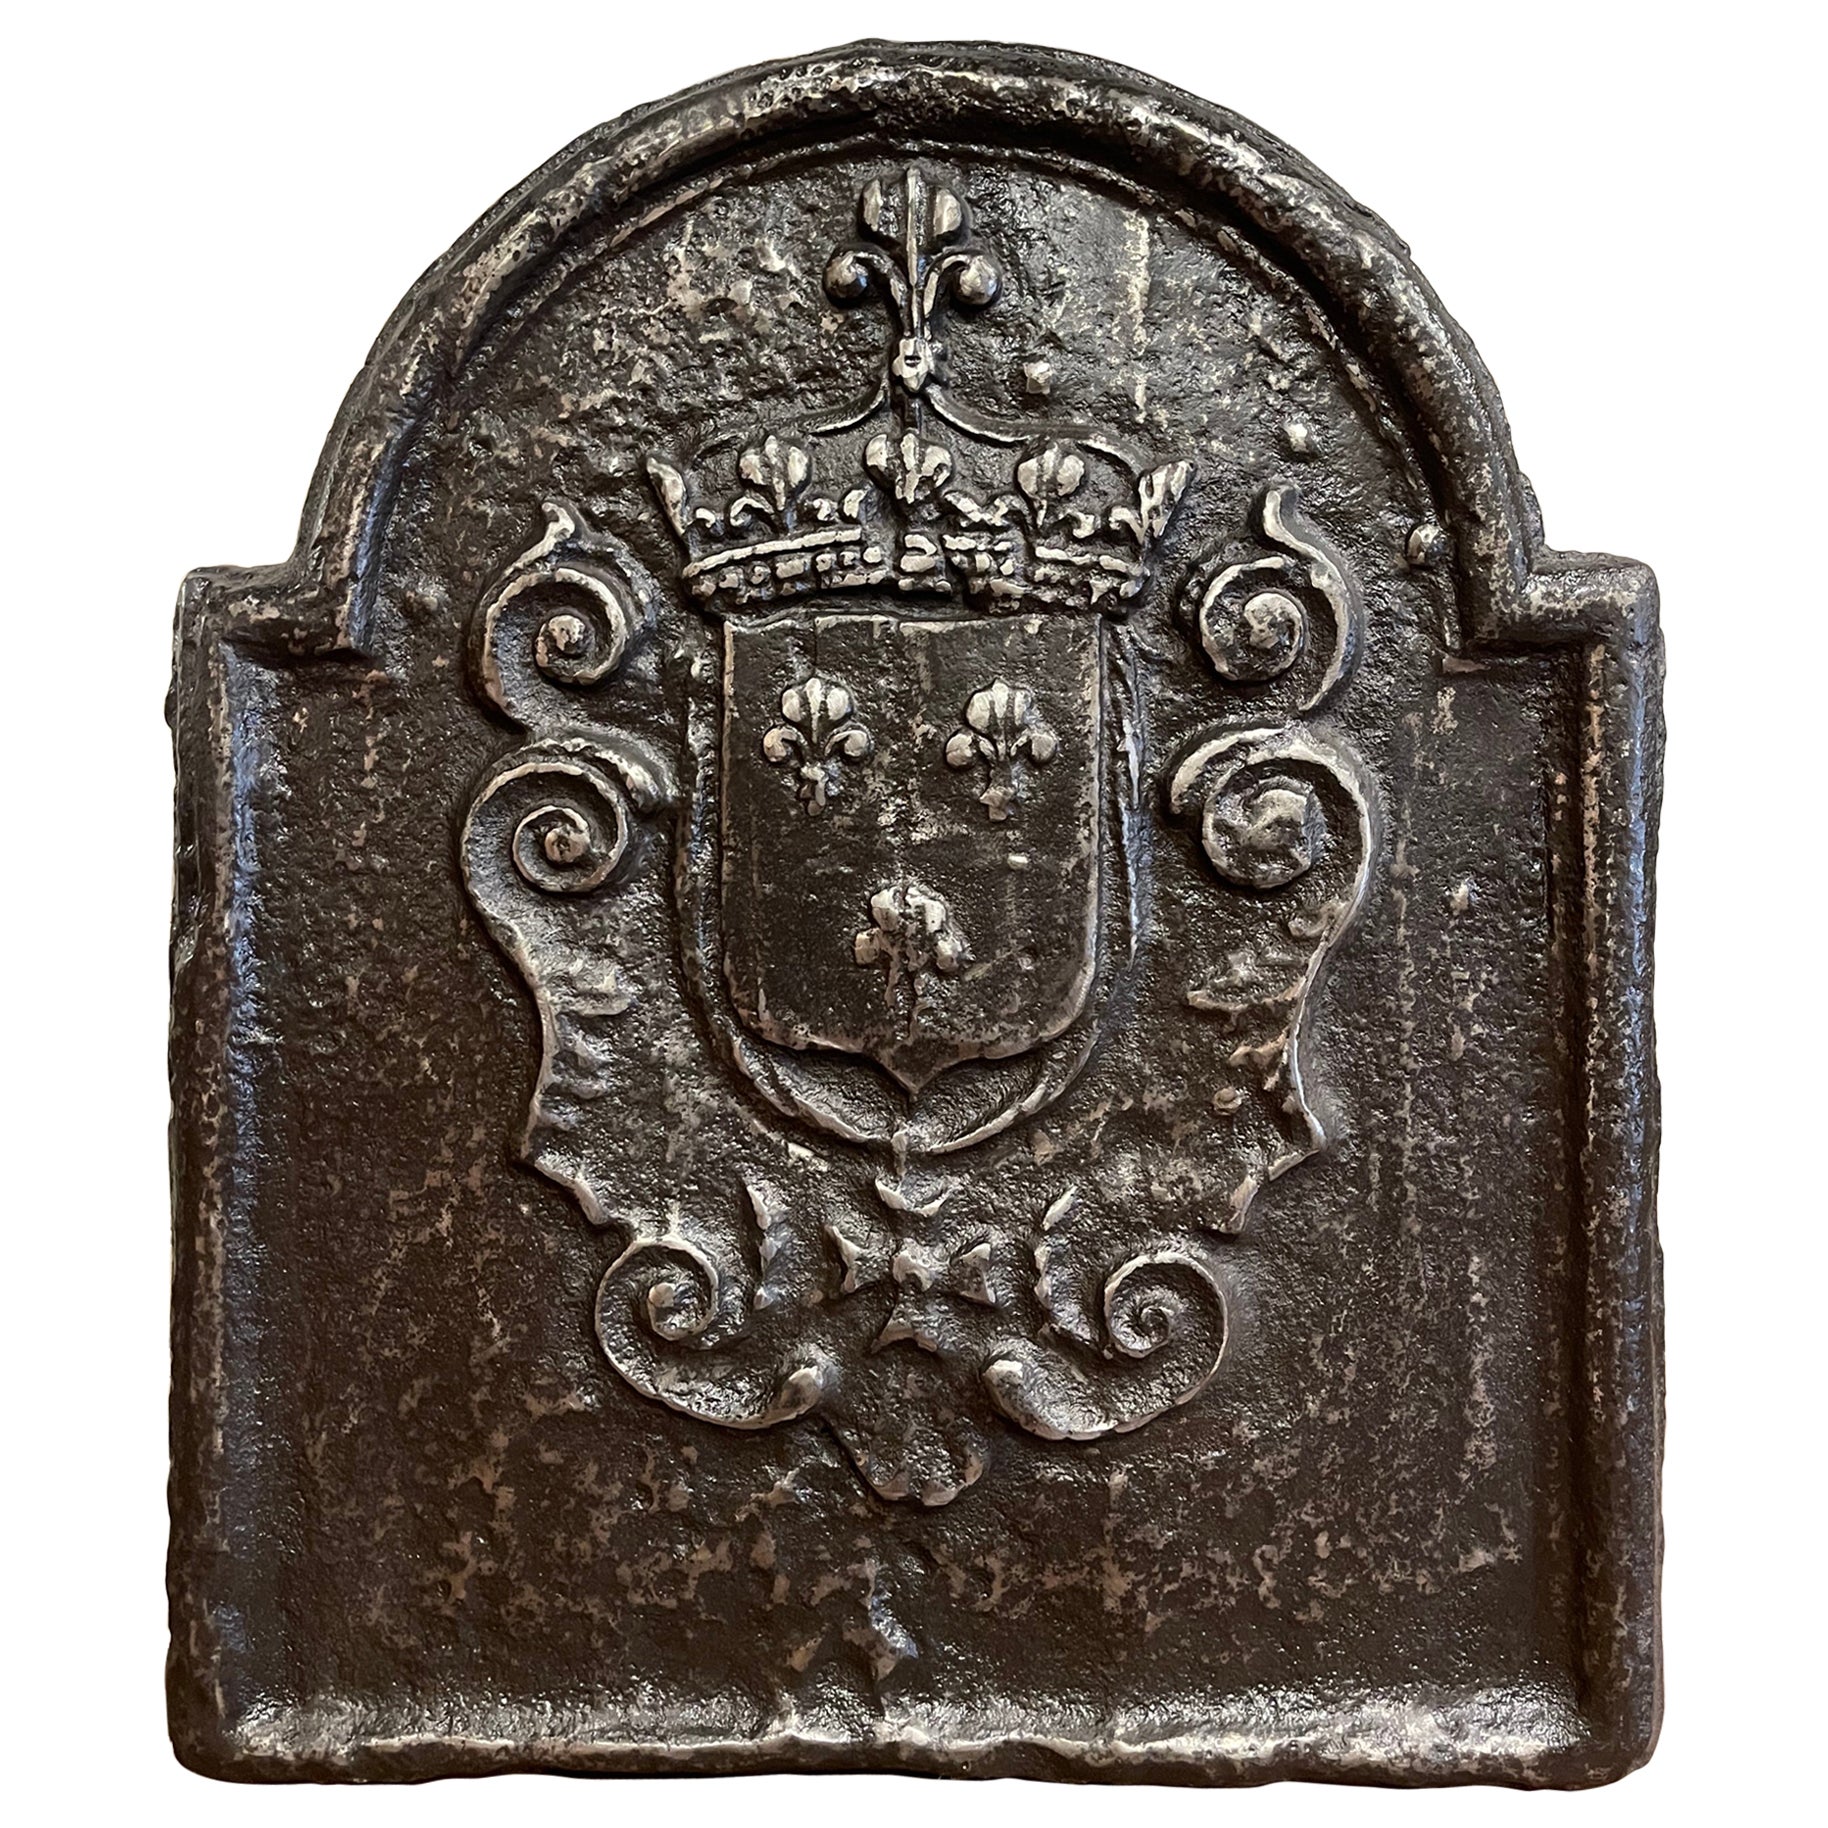 Kaminschirm aus poliertem Eisen des 18. Jahrhunderts mit „Royal Coat of Arms of France“